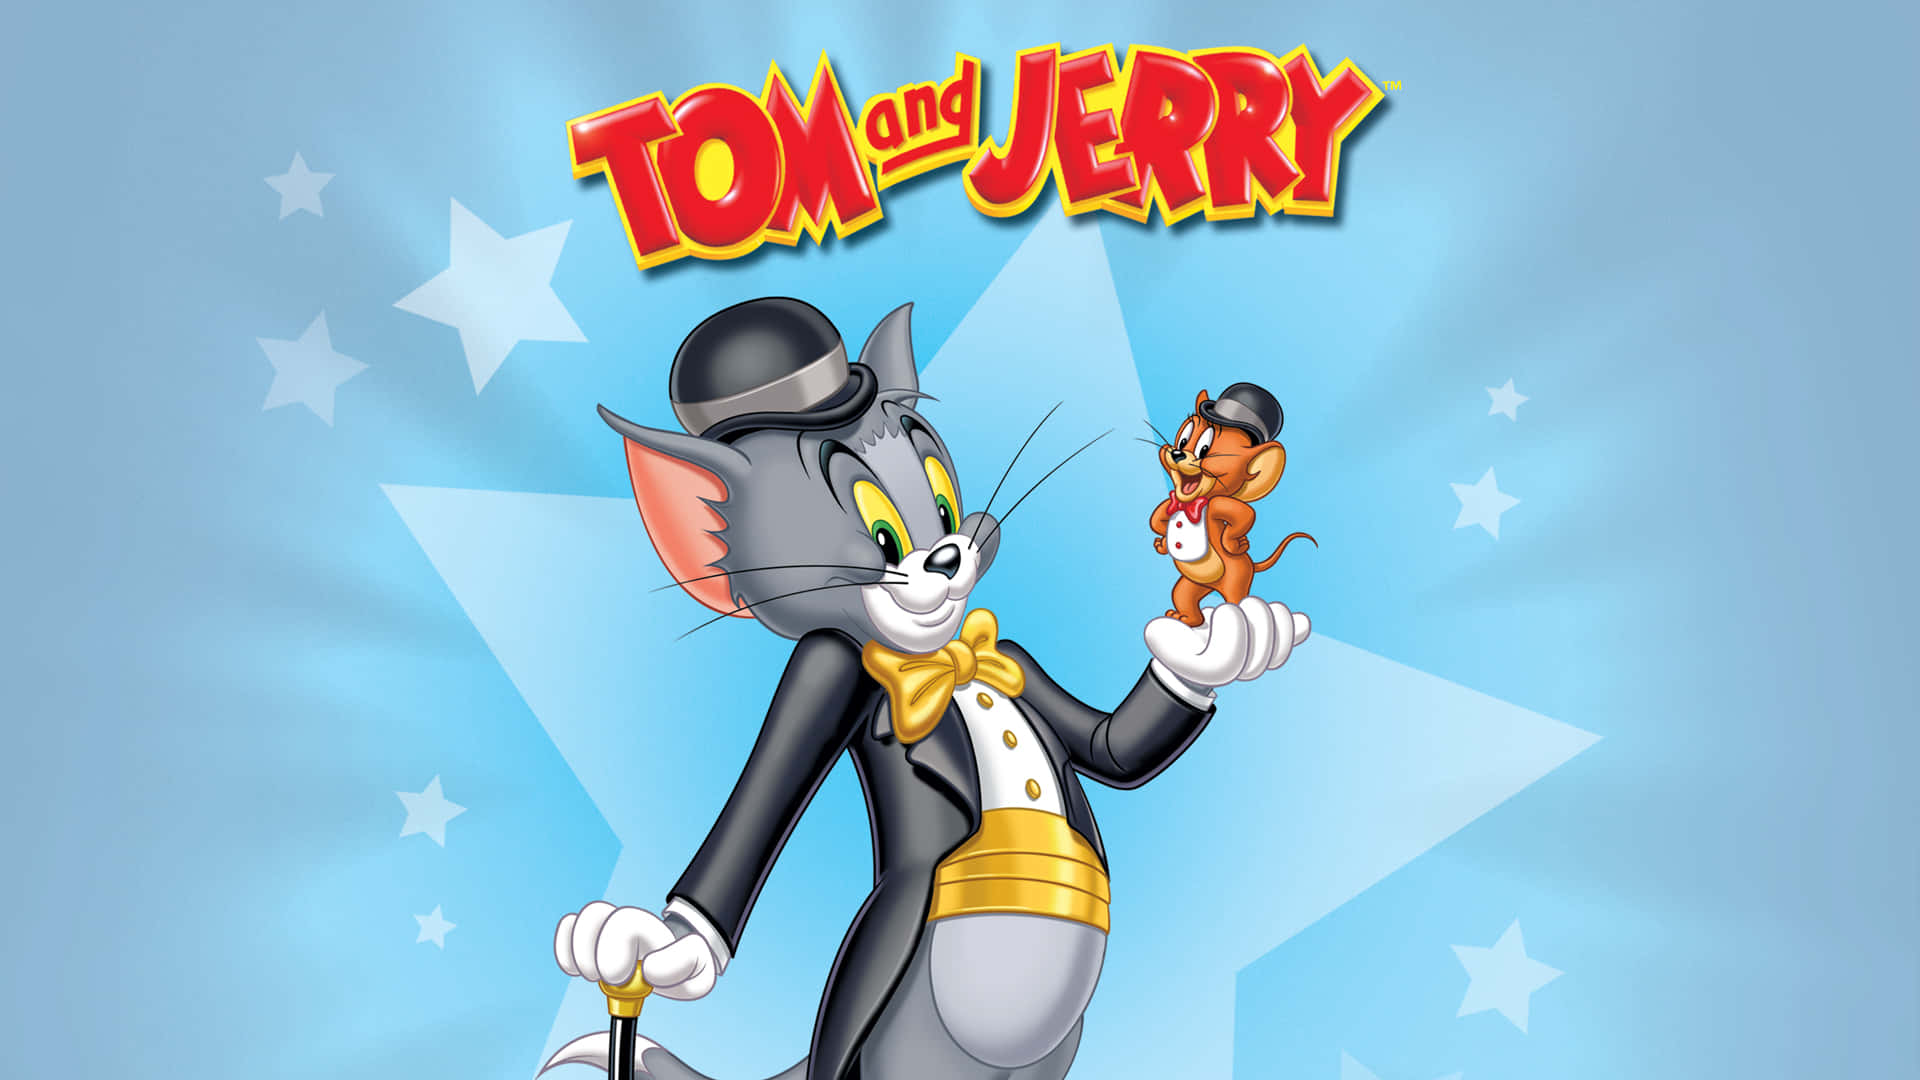 Immagini Di Tom E Jerry